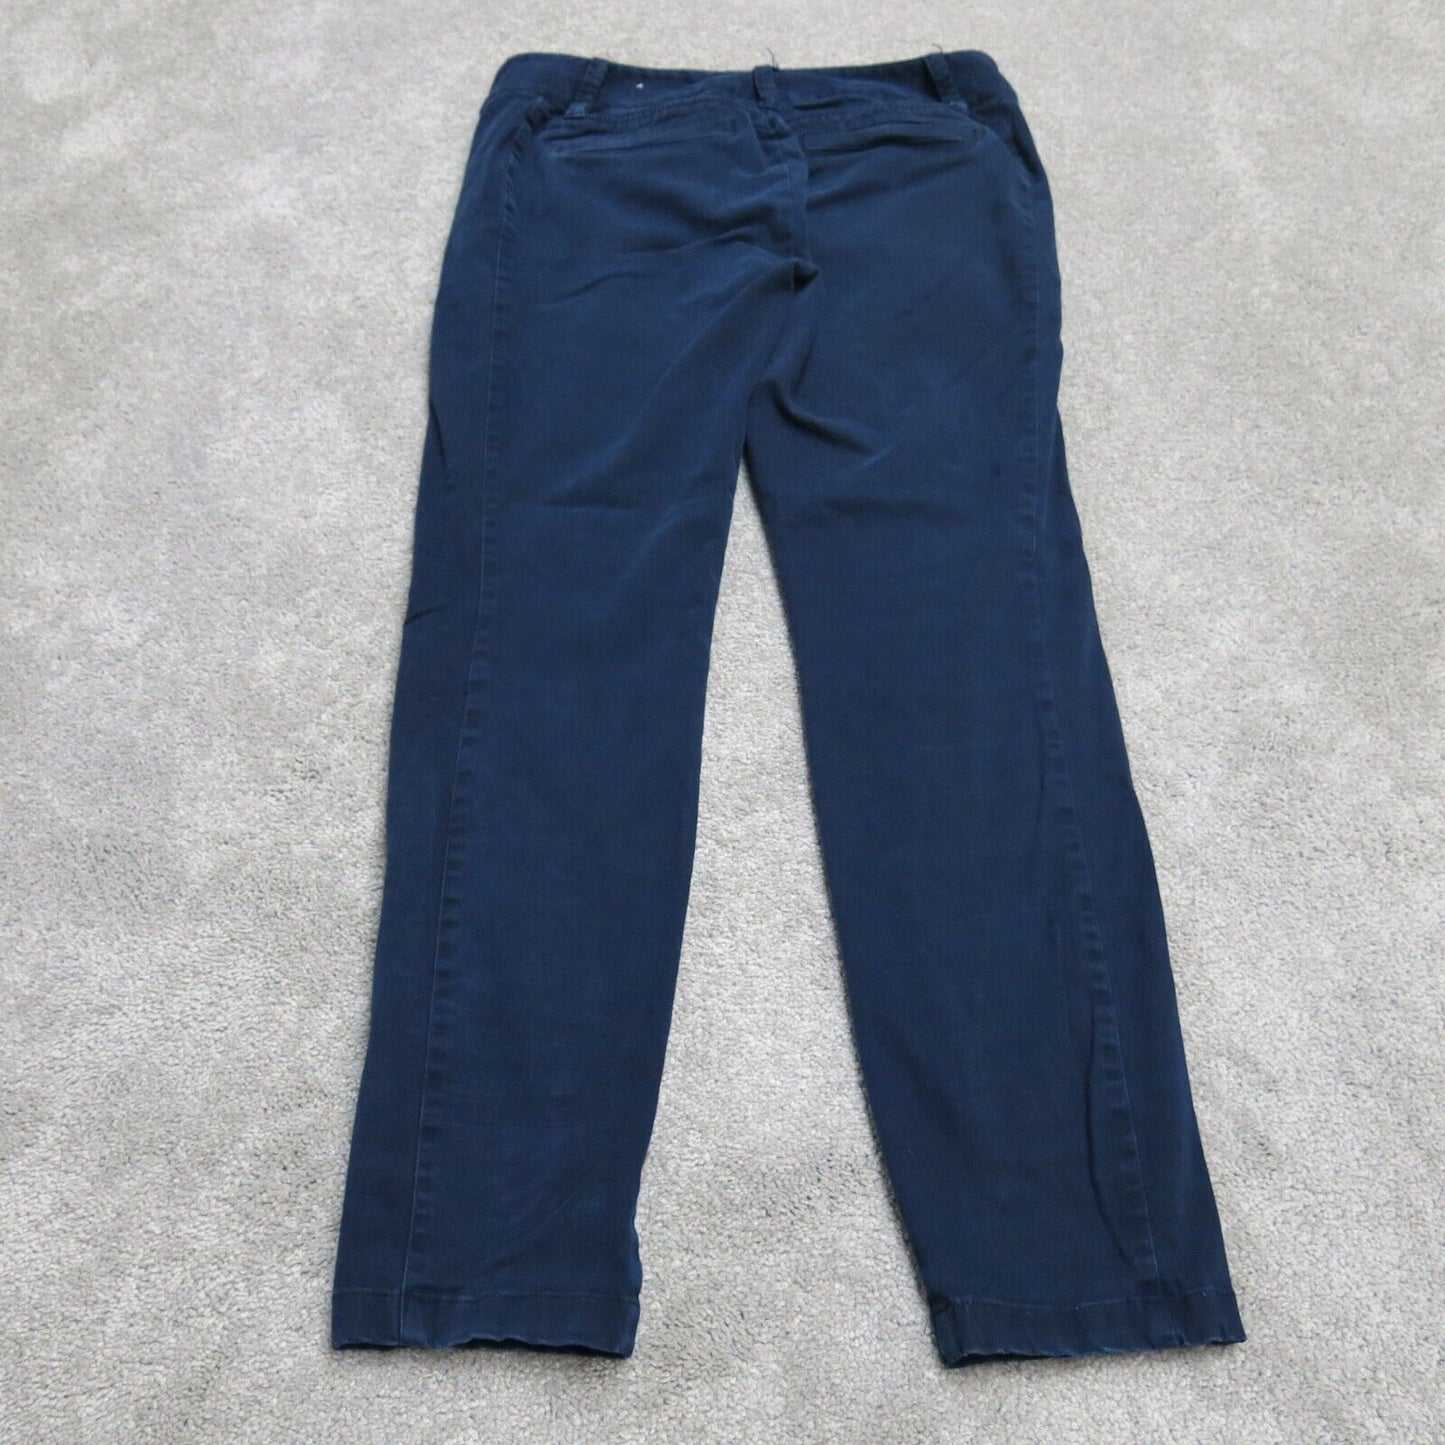 Vintage Women Modern Skinny Ankle Jeans Denim Stretch Low Rise Pocket Blue SZ  4